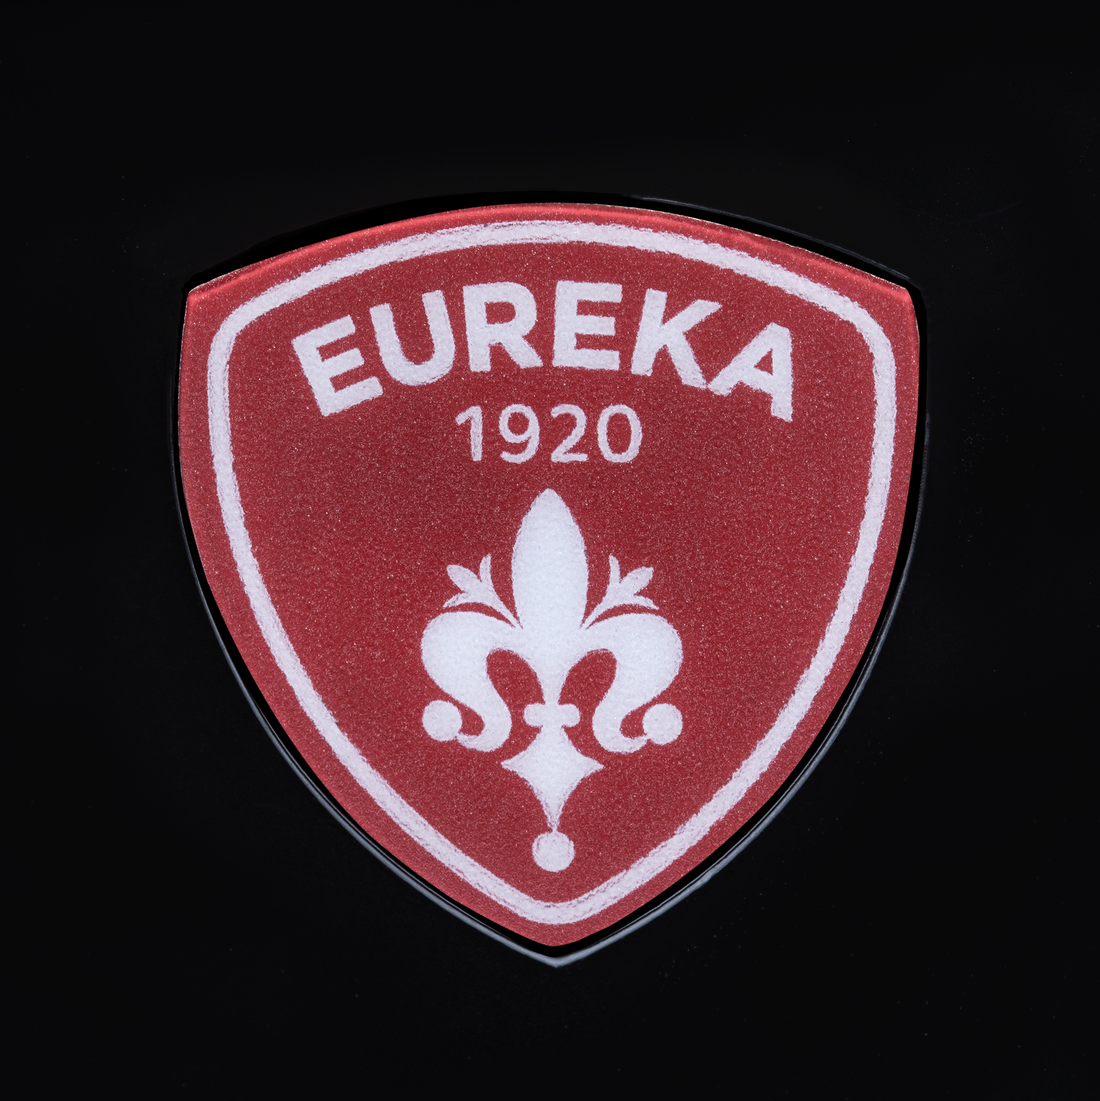 Eureka Mignon Libra Weight Based Espresso Grinder in Matte Black